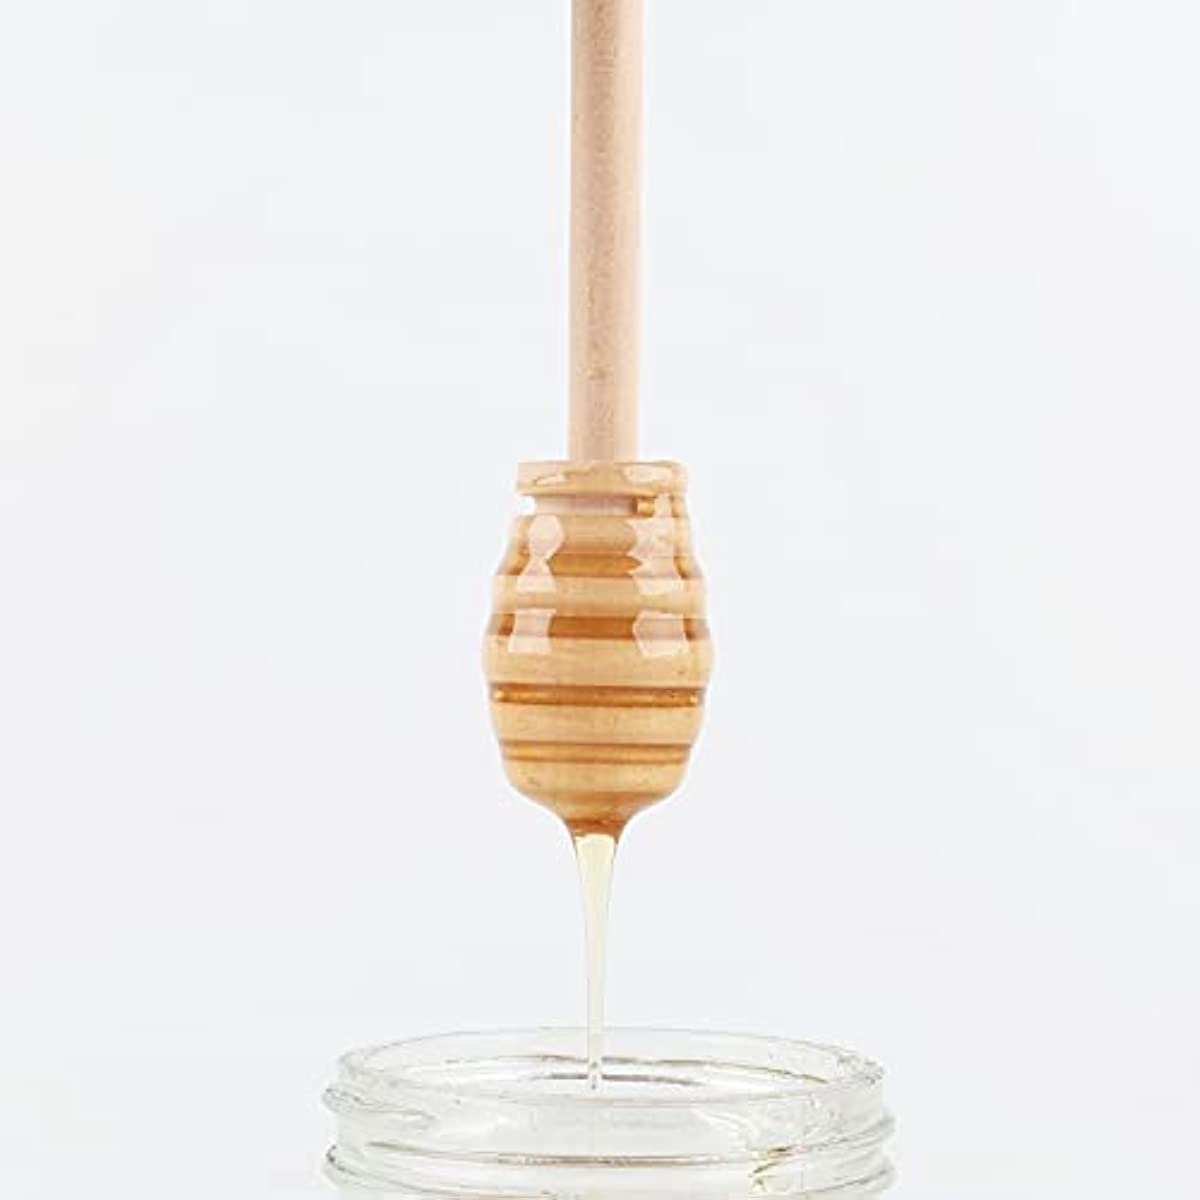 Wooden Honey Dipper Stick for Honey Jar Dispense Drizzle Honey,1 Pc 6.3 Inch / 16cm Honey Dippers Sticks-Honeycomb Stick-Wooden Honey Spoon